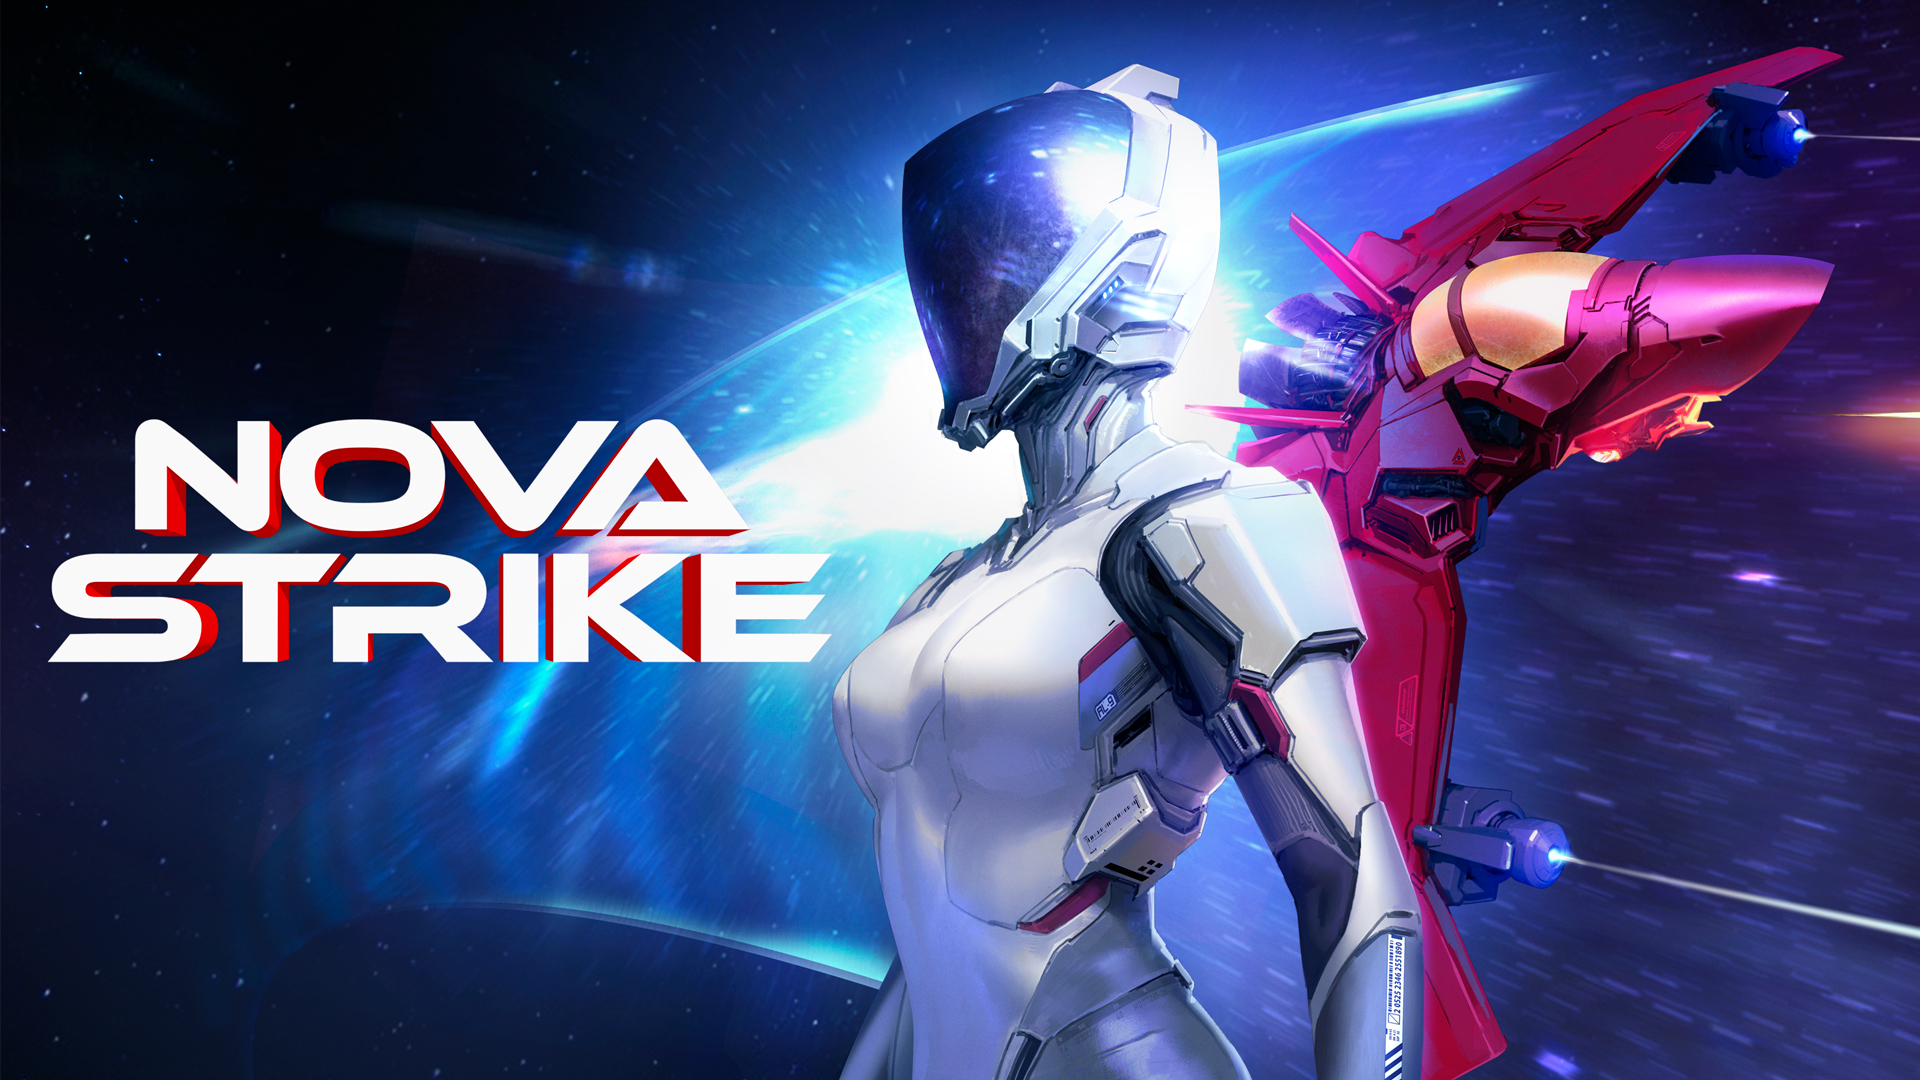 Nova Strike download the last version for mac